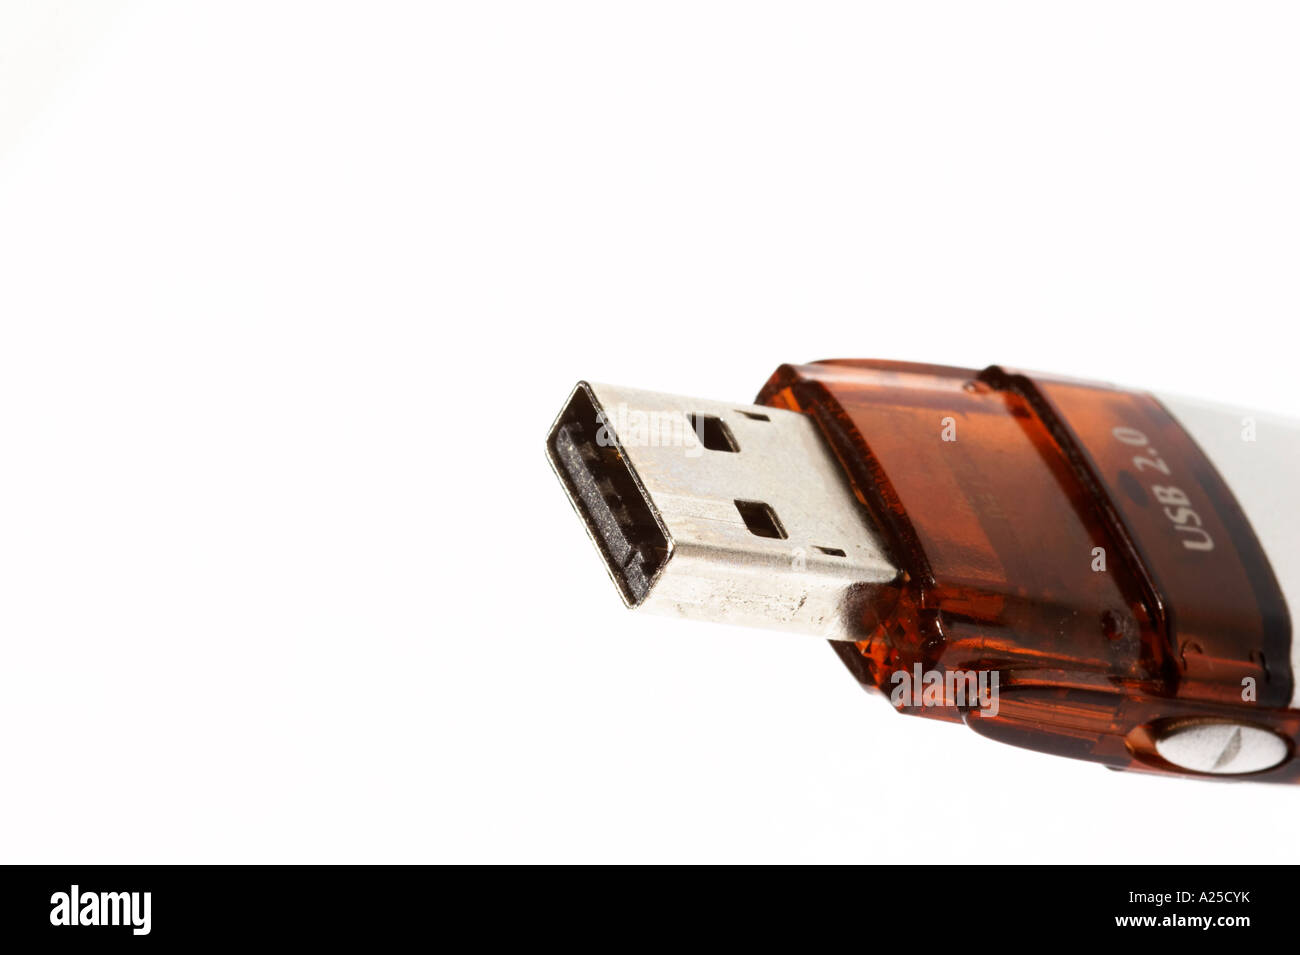 USB memory card isolated on white background Stock Photo